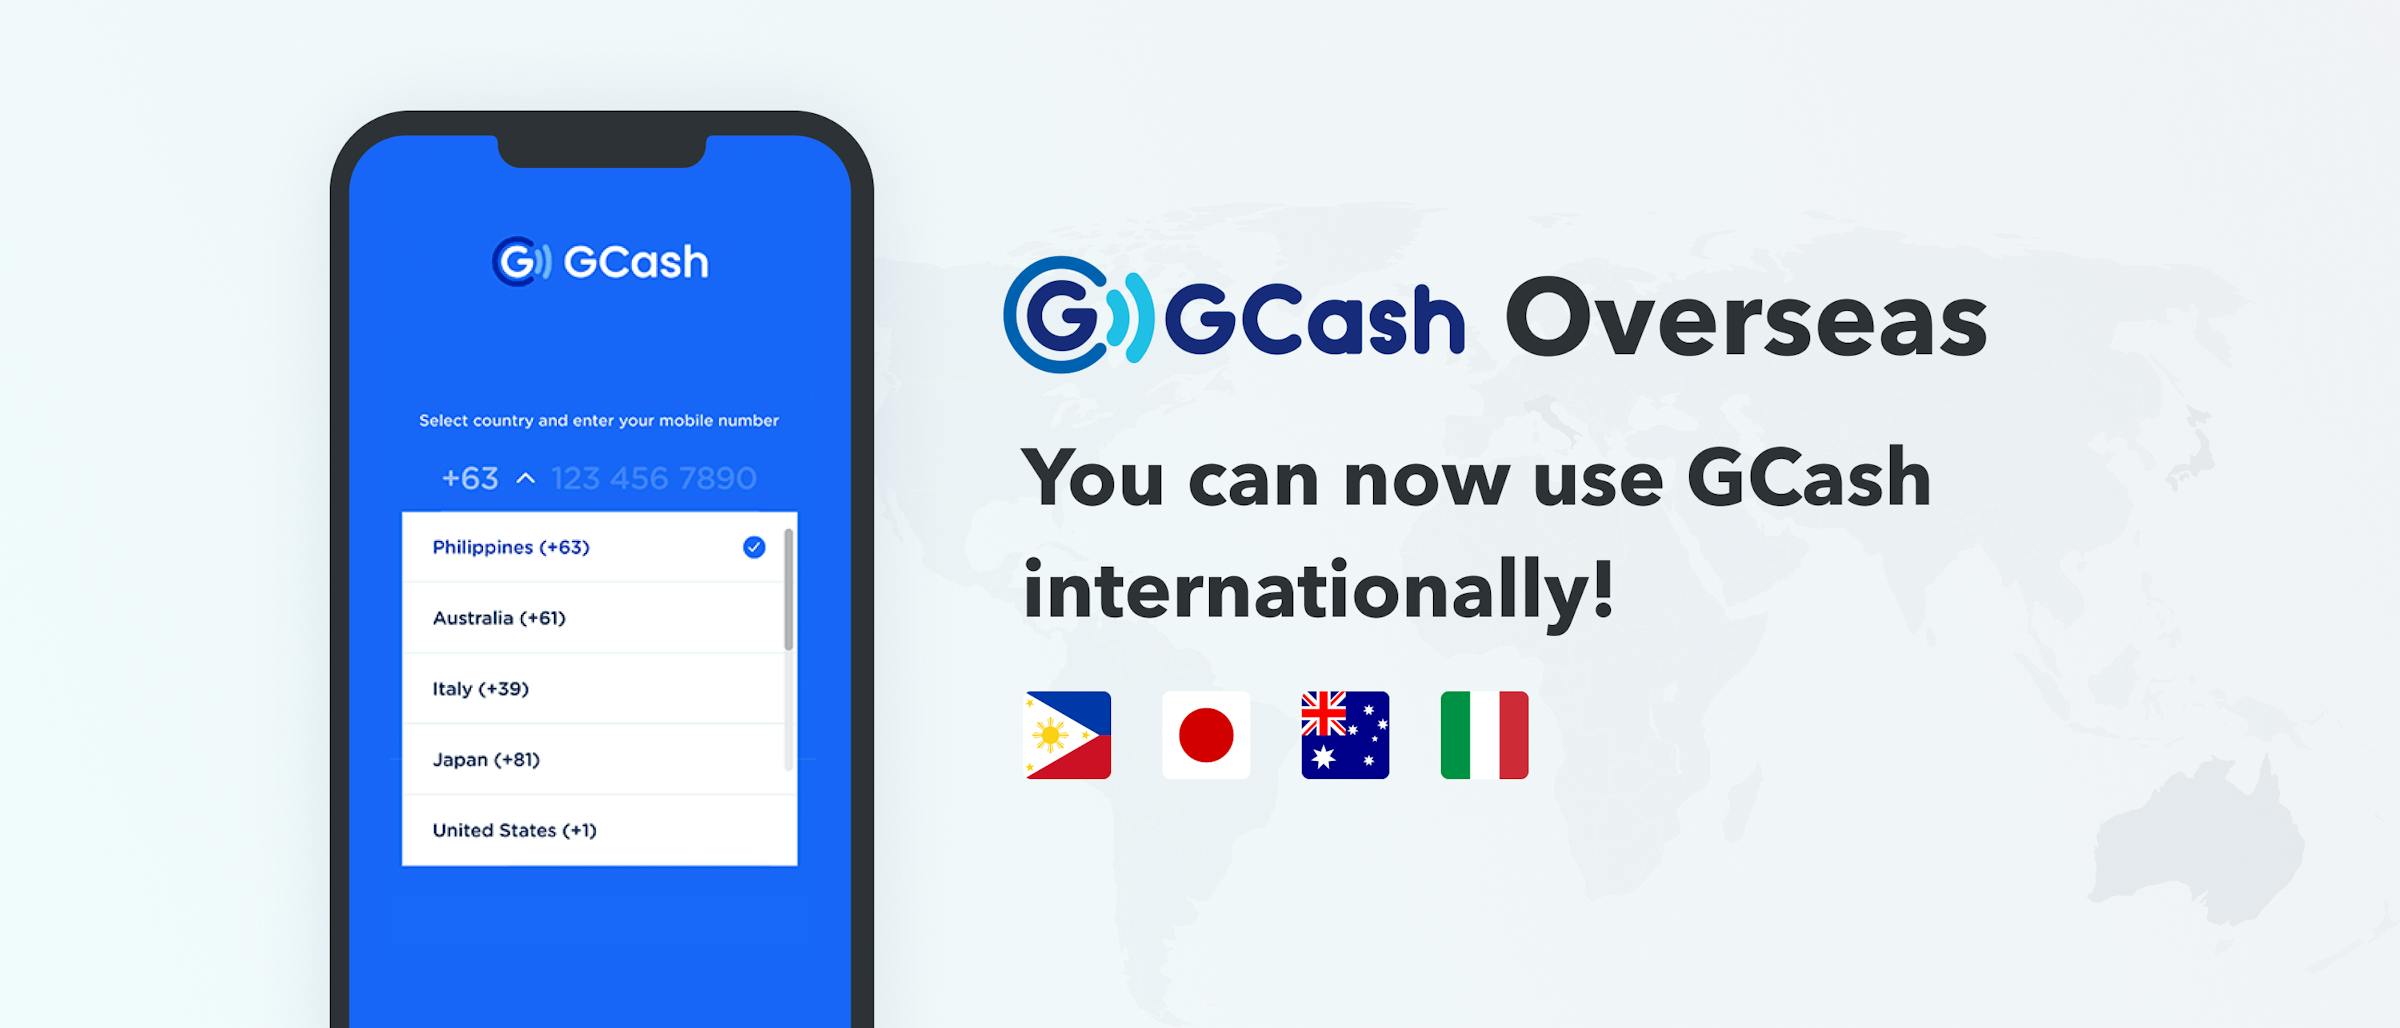 GCash Overseas. You can now use GCash internationally!